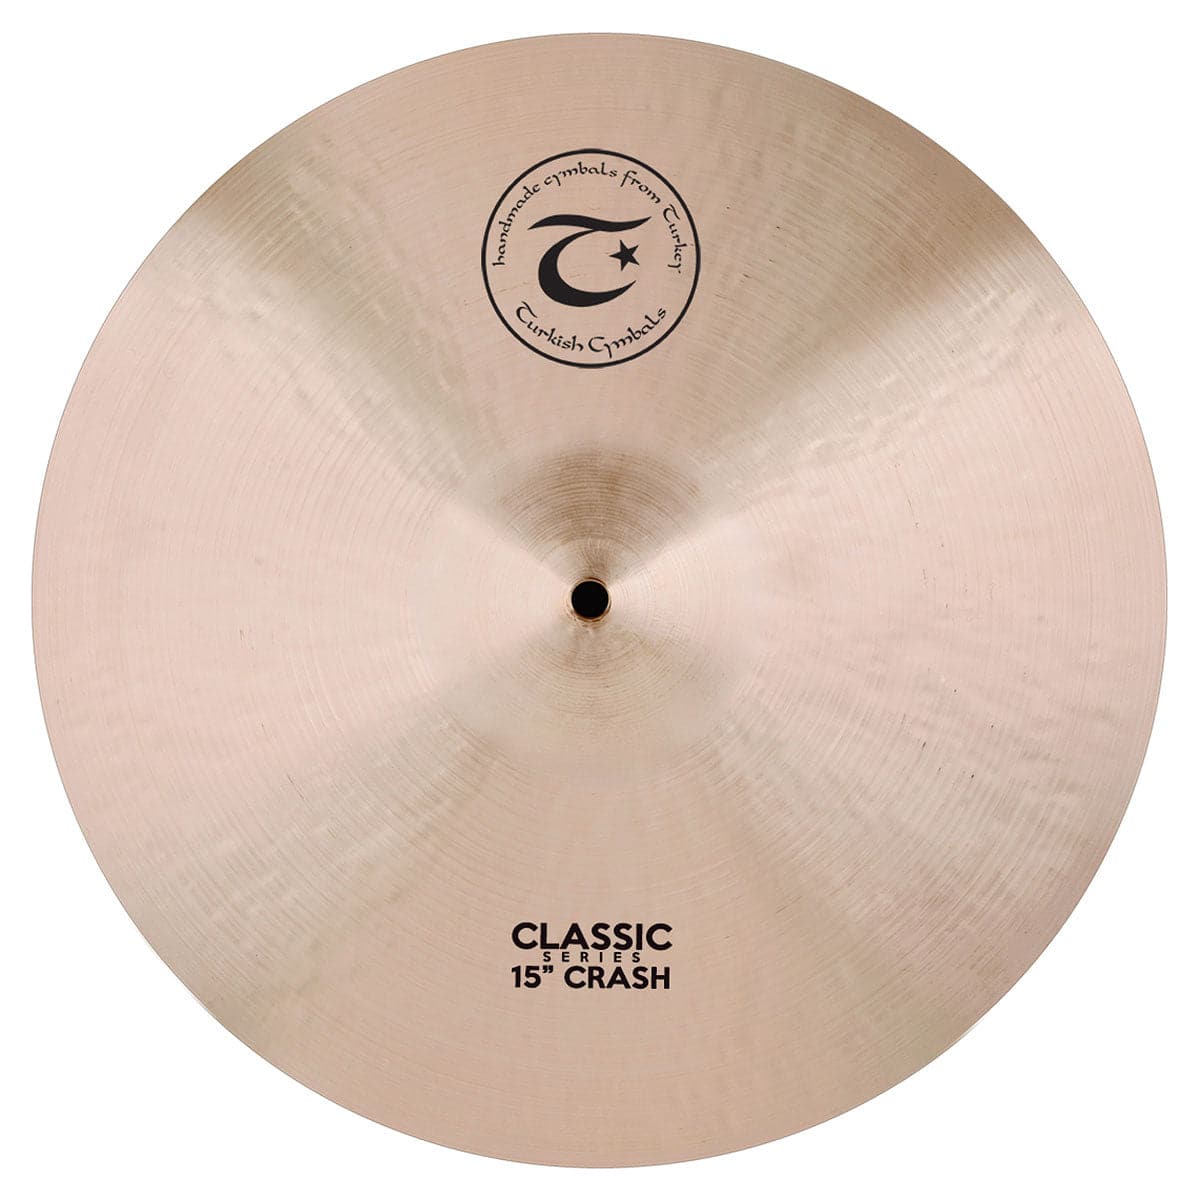 Turkish Classic Crash Cymbal 15" 822 grams